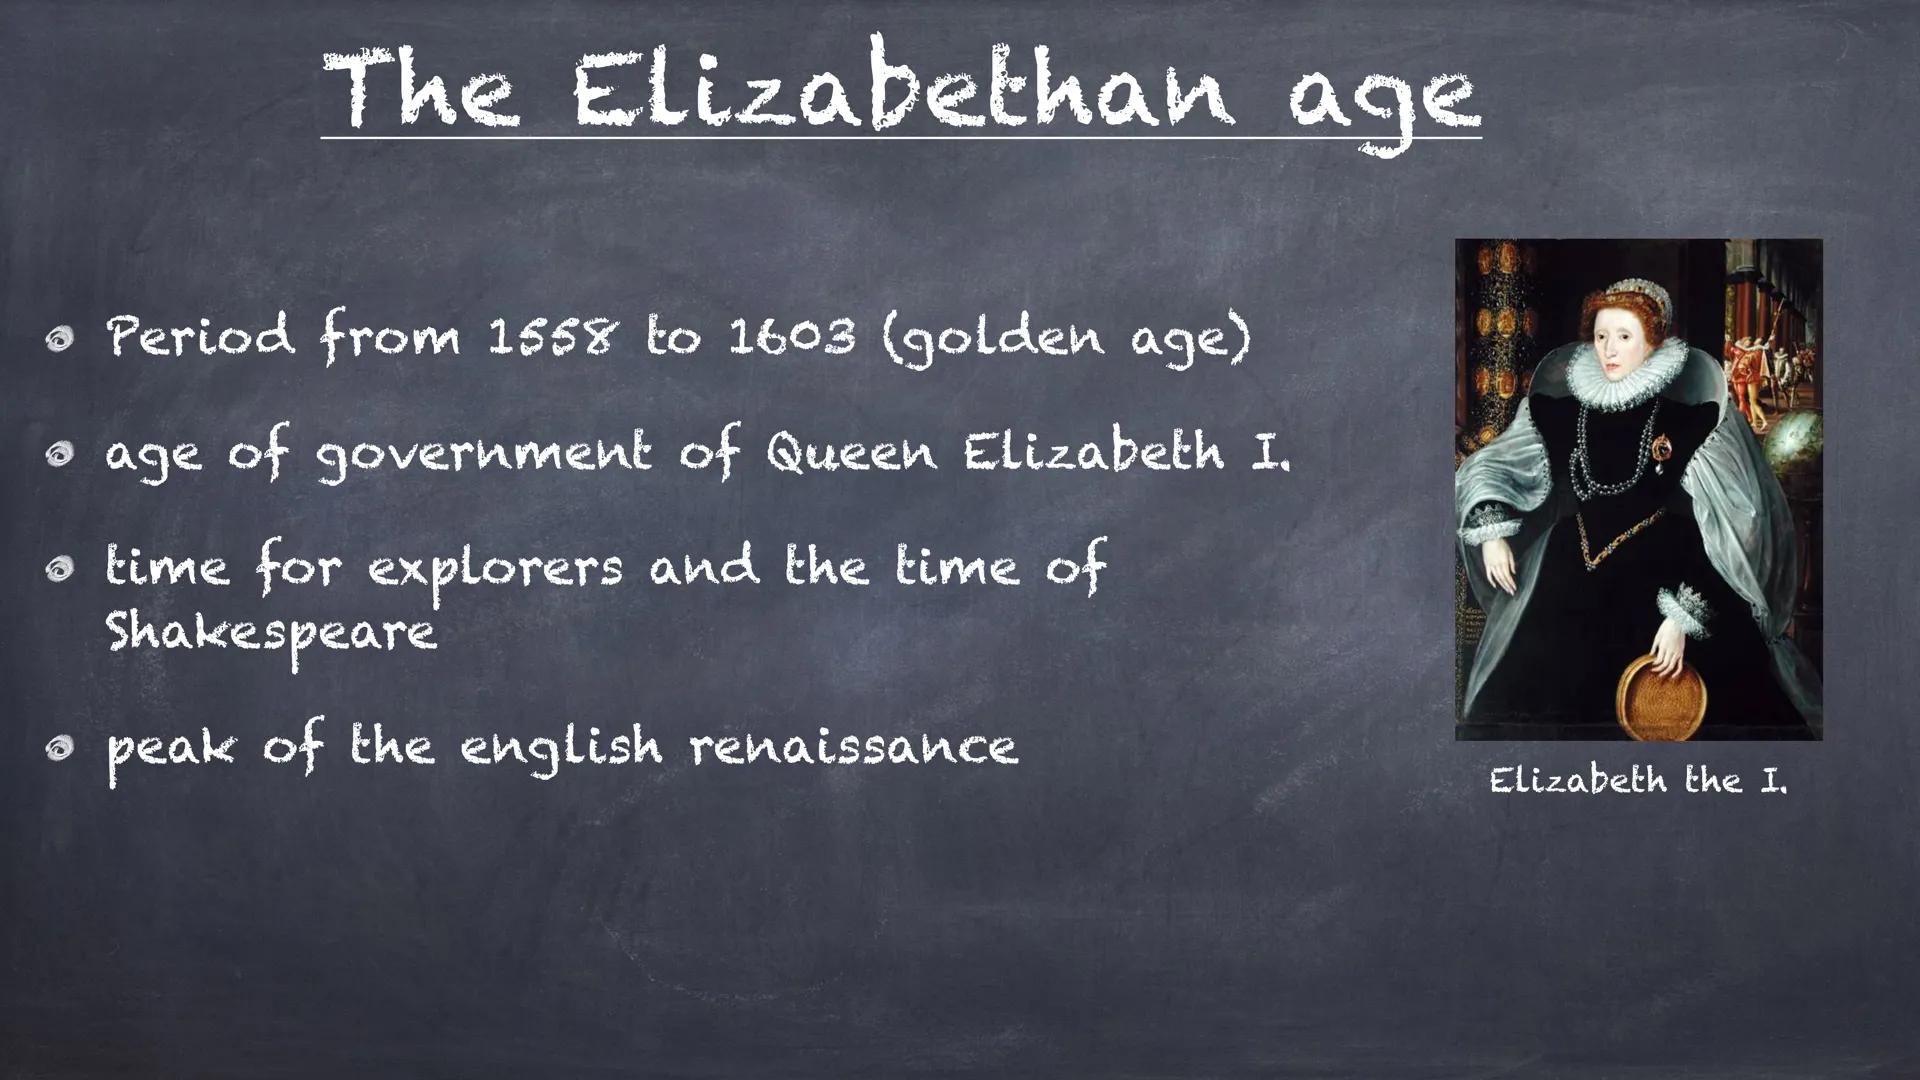 Elizabethan World Picture • The Elizabethan age
• The Elizabethan Stage
The Elizabethan World View 1
The Elizabethan World View 2
• The art 